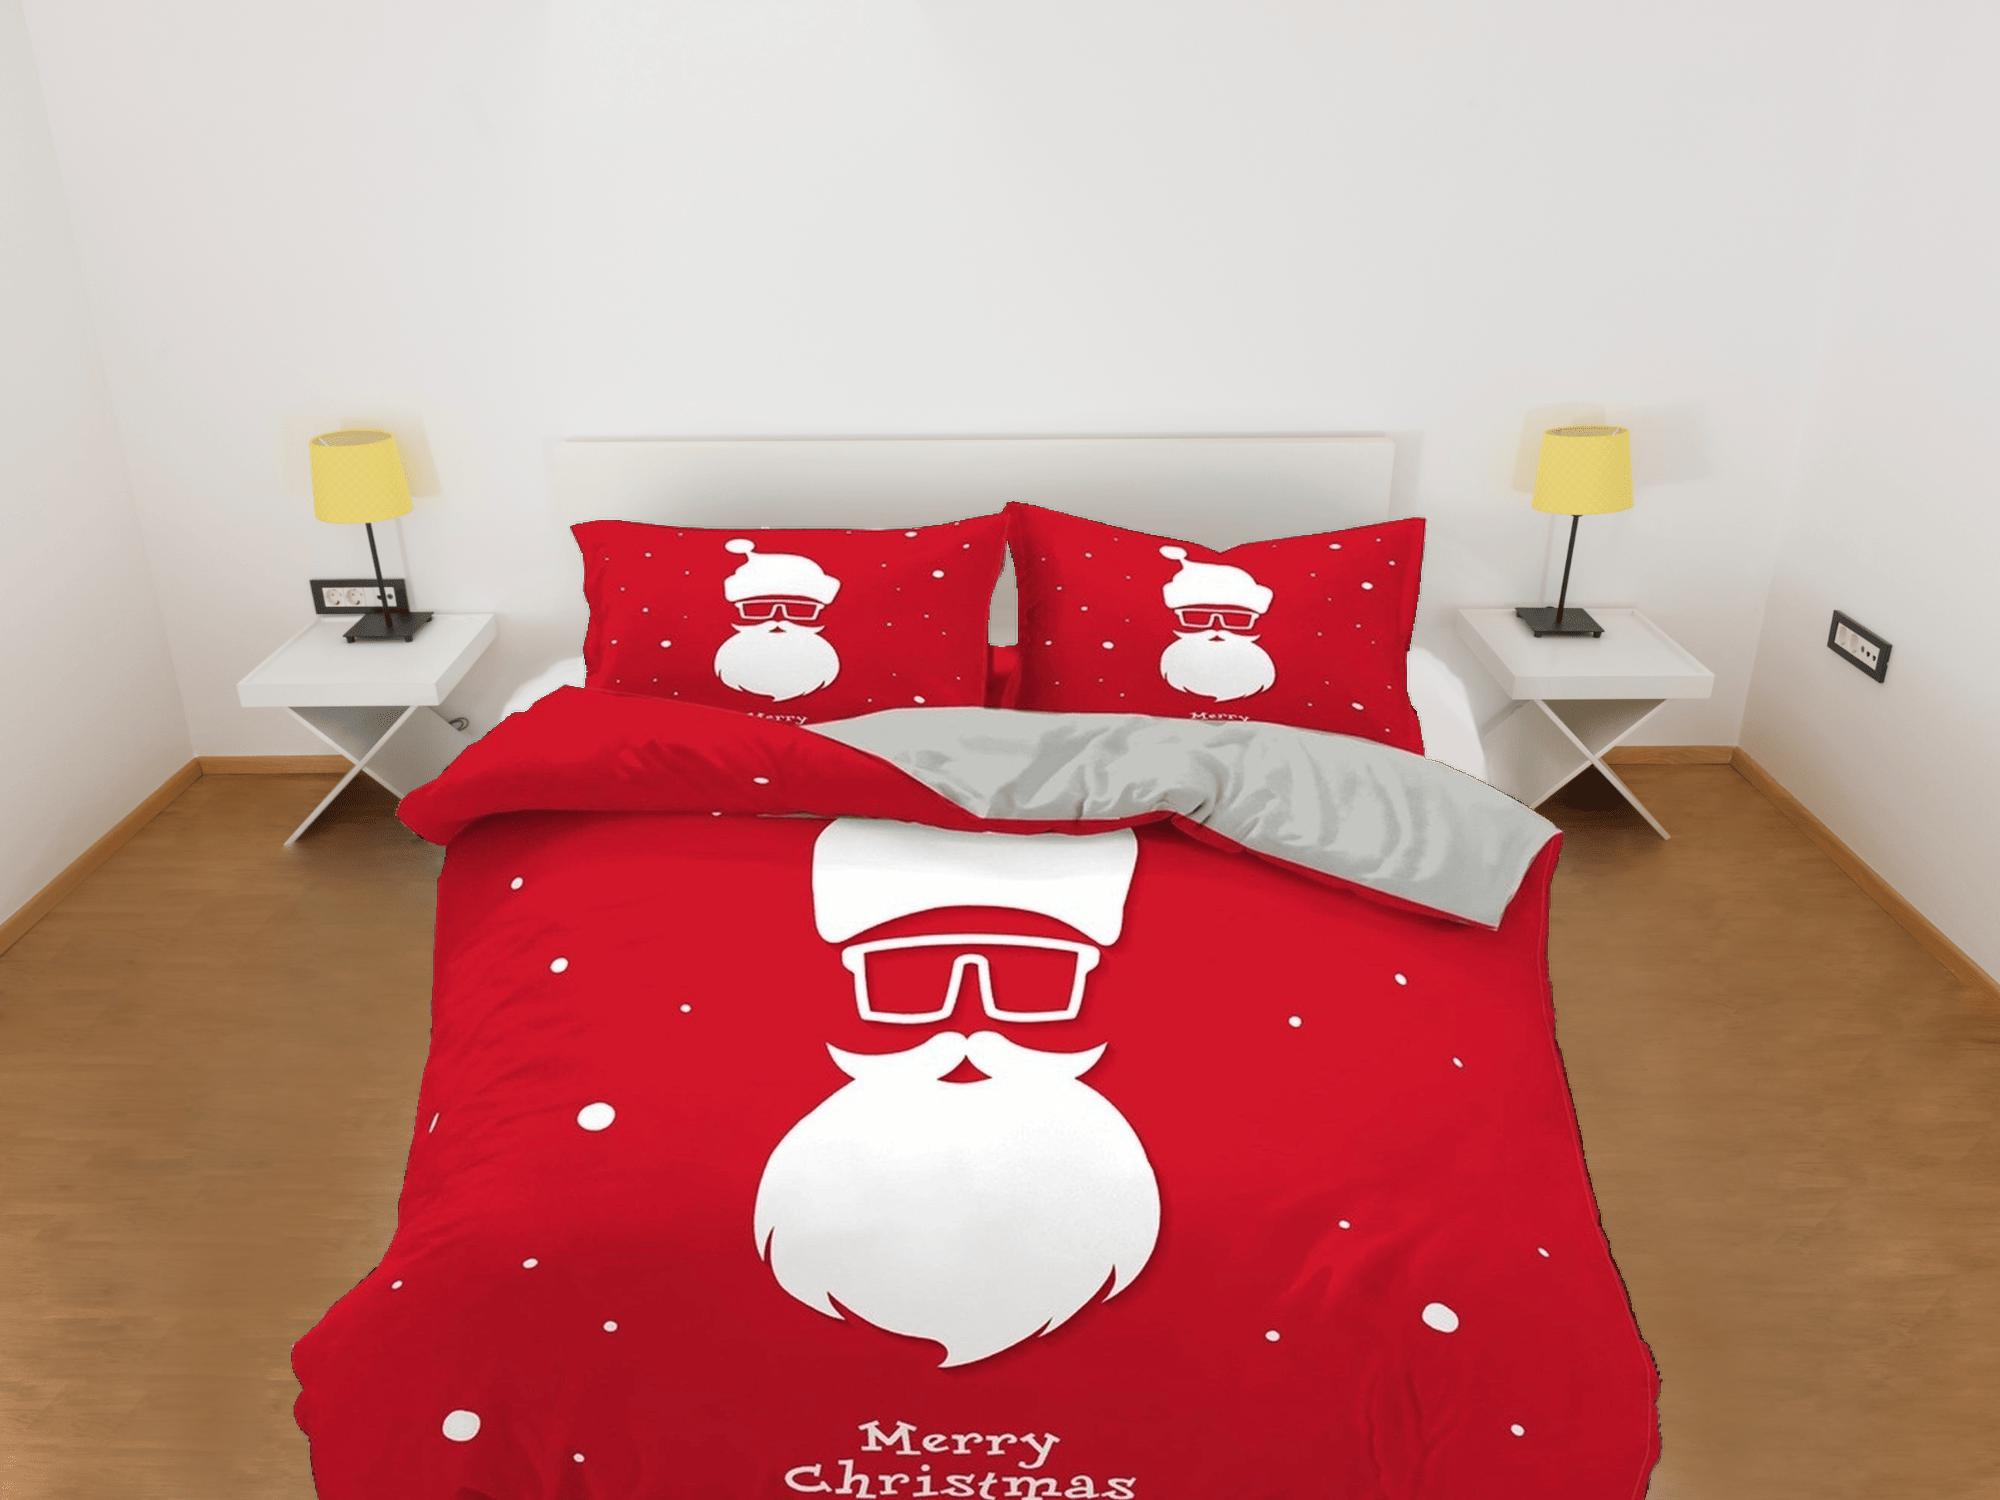 daintyduvet Cool Santa Claus specs Christmas bedding, pillowcase holiday gift duvet cover king queen twin toddler bedding baby Christmas farmhouse decor